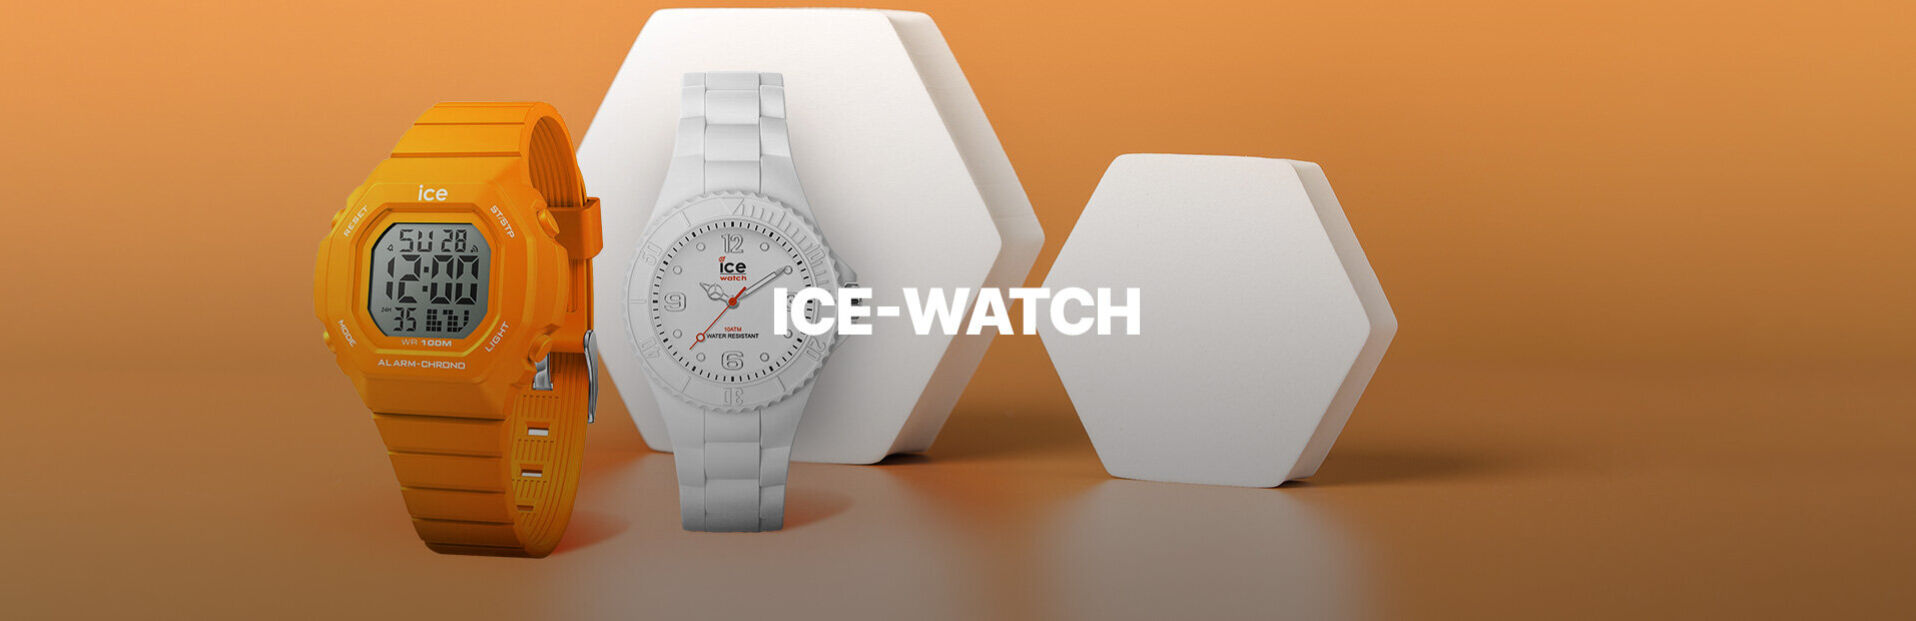 Vente Privée Ice-Watch